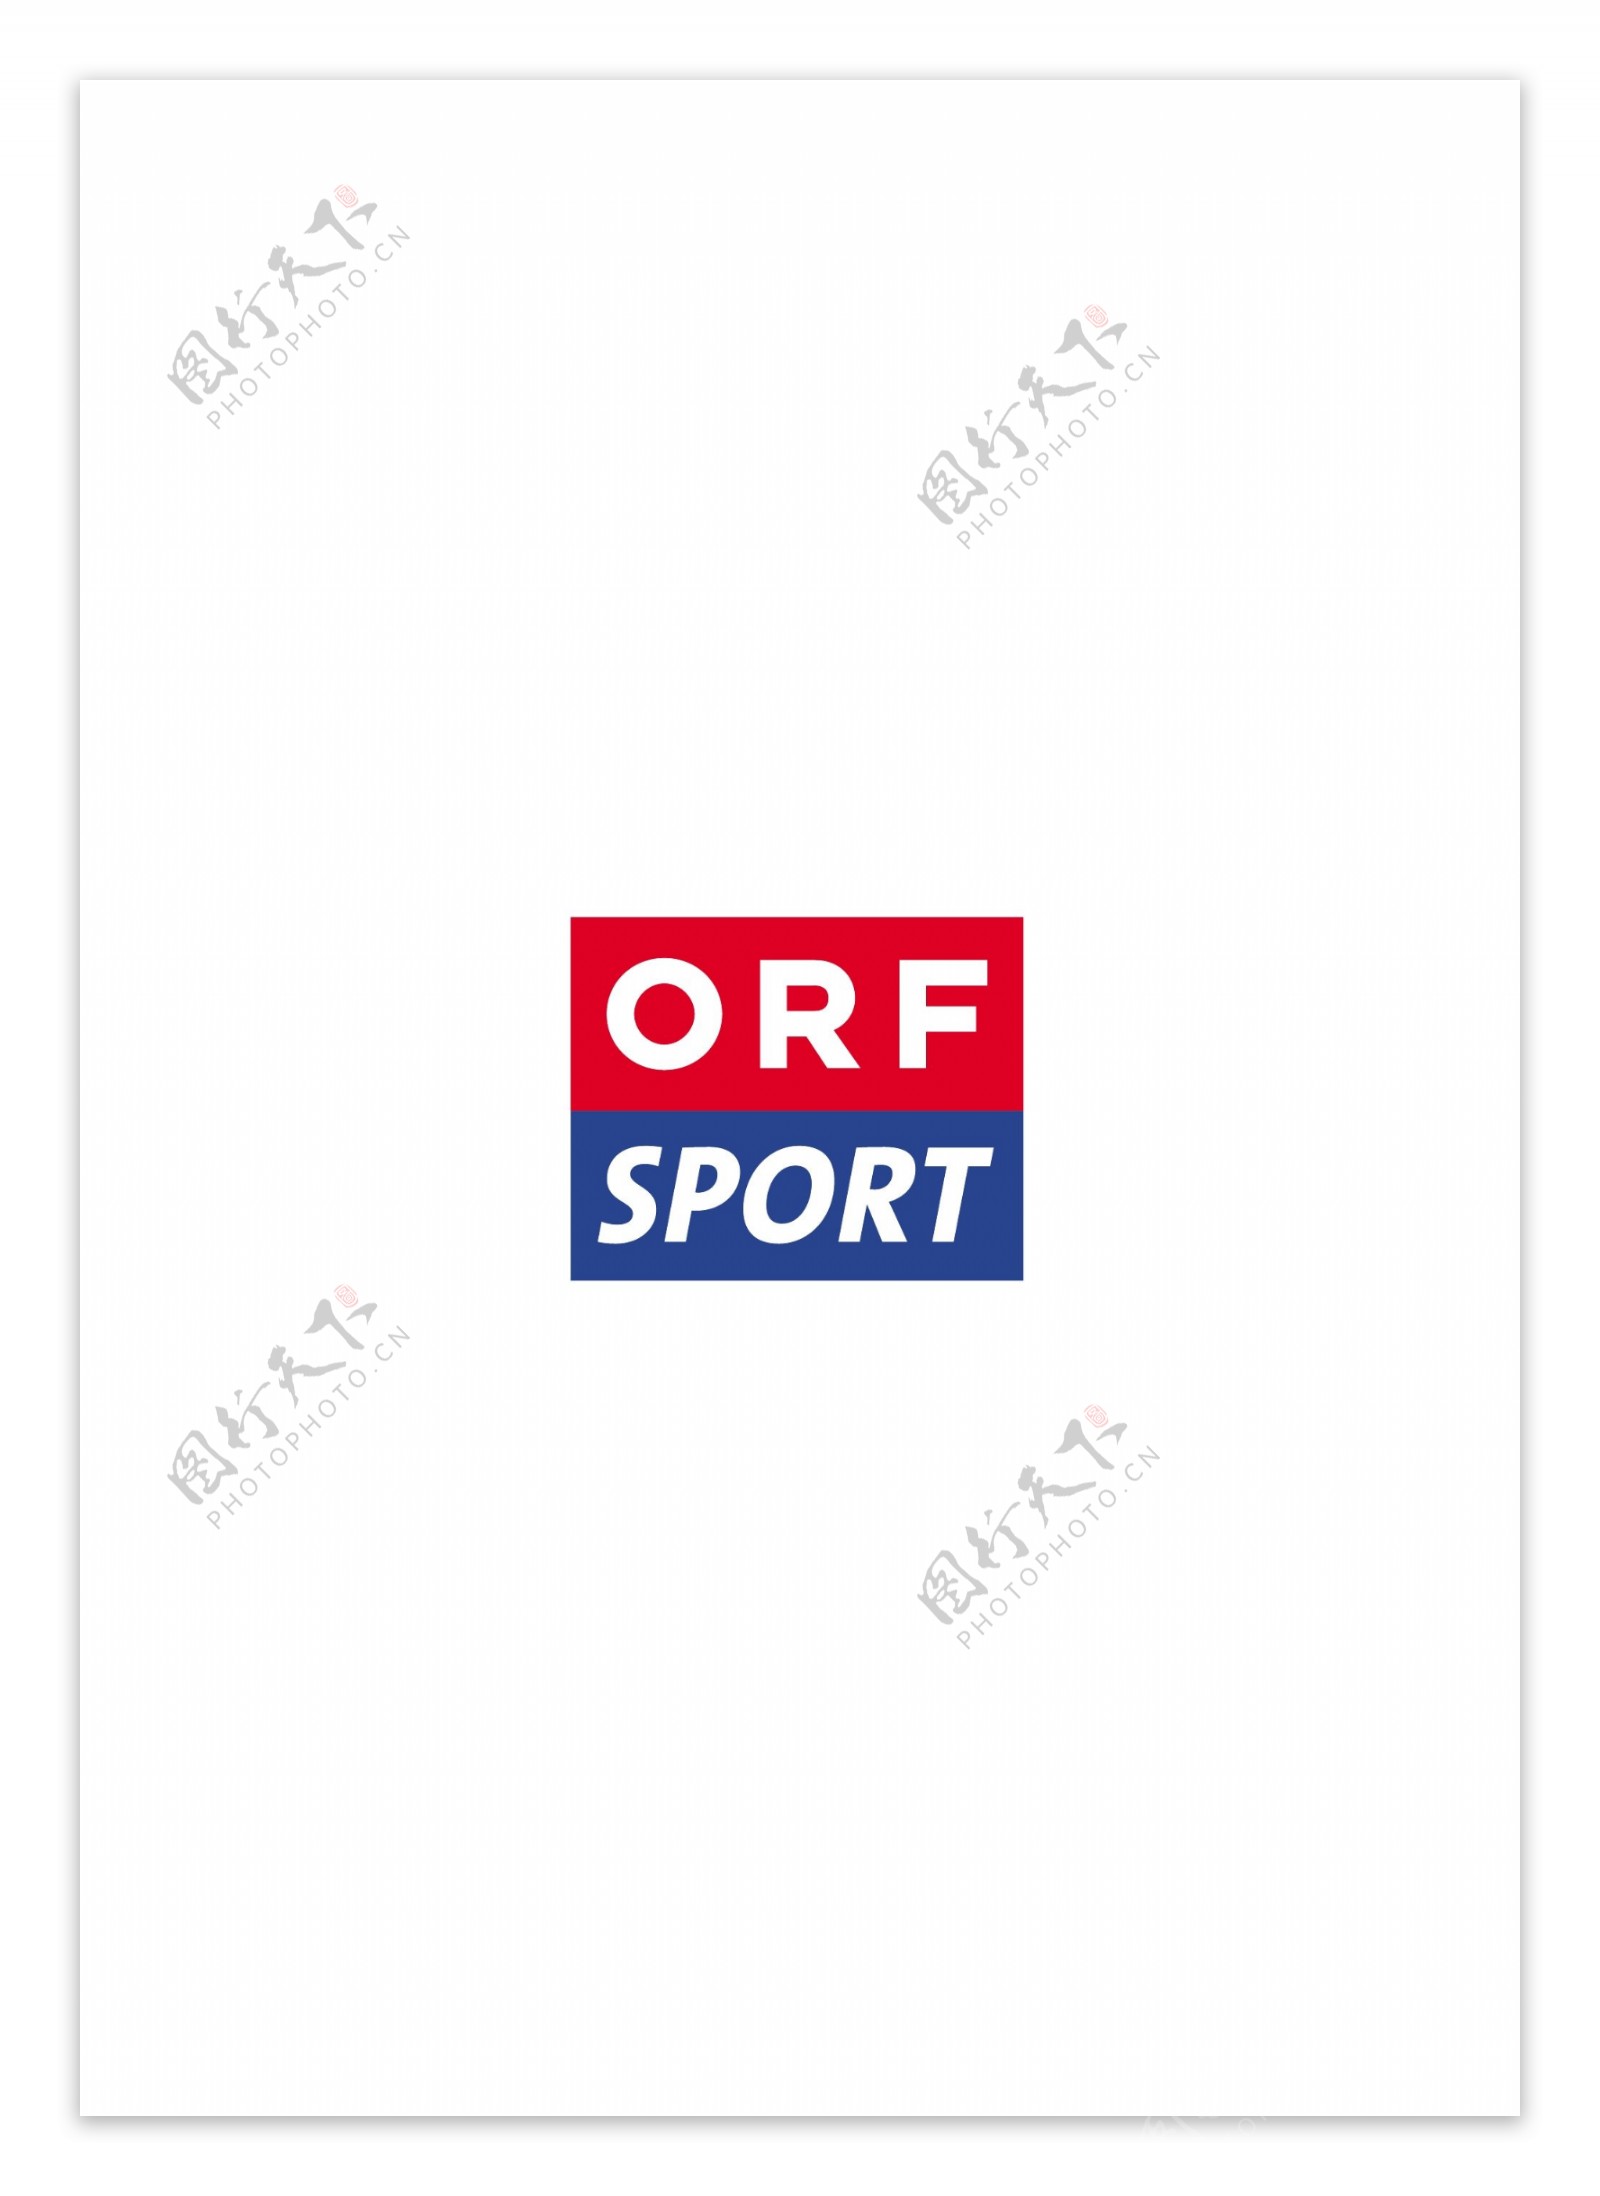 ORFSportlogo设计欣赏ORFSport体育比赛标志下载标志设计欣赏